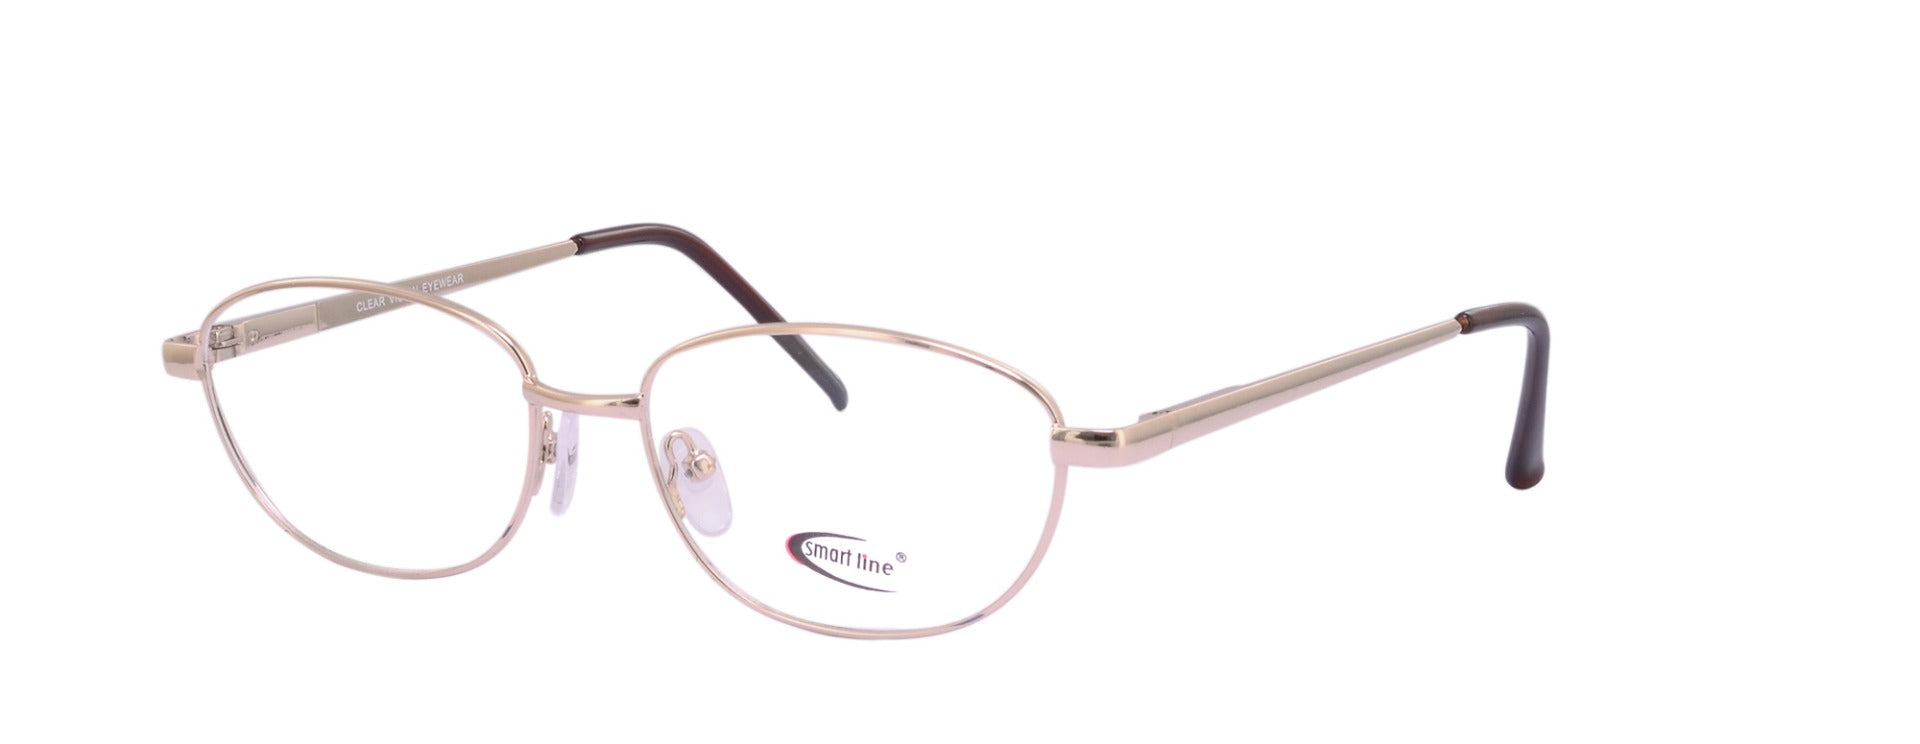 smartline glasses oval metal glasses